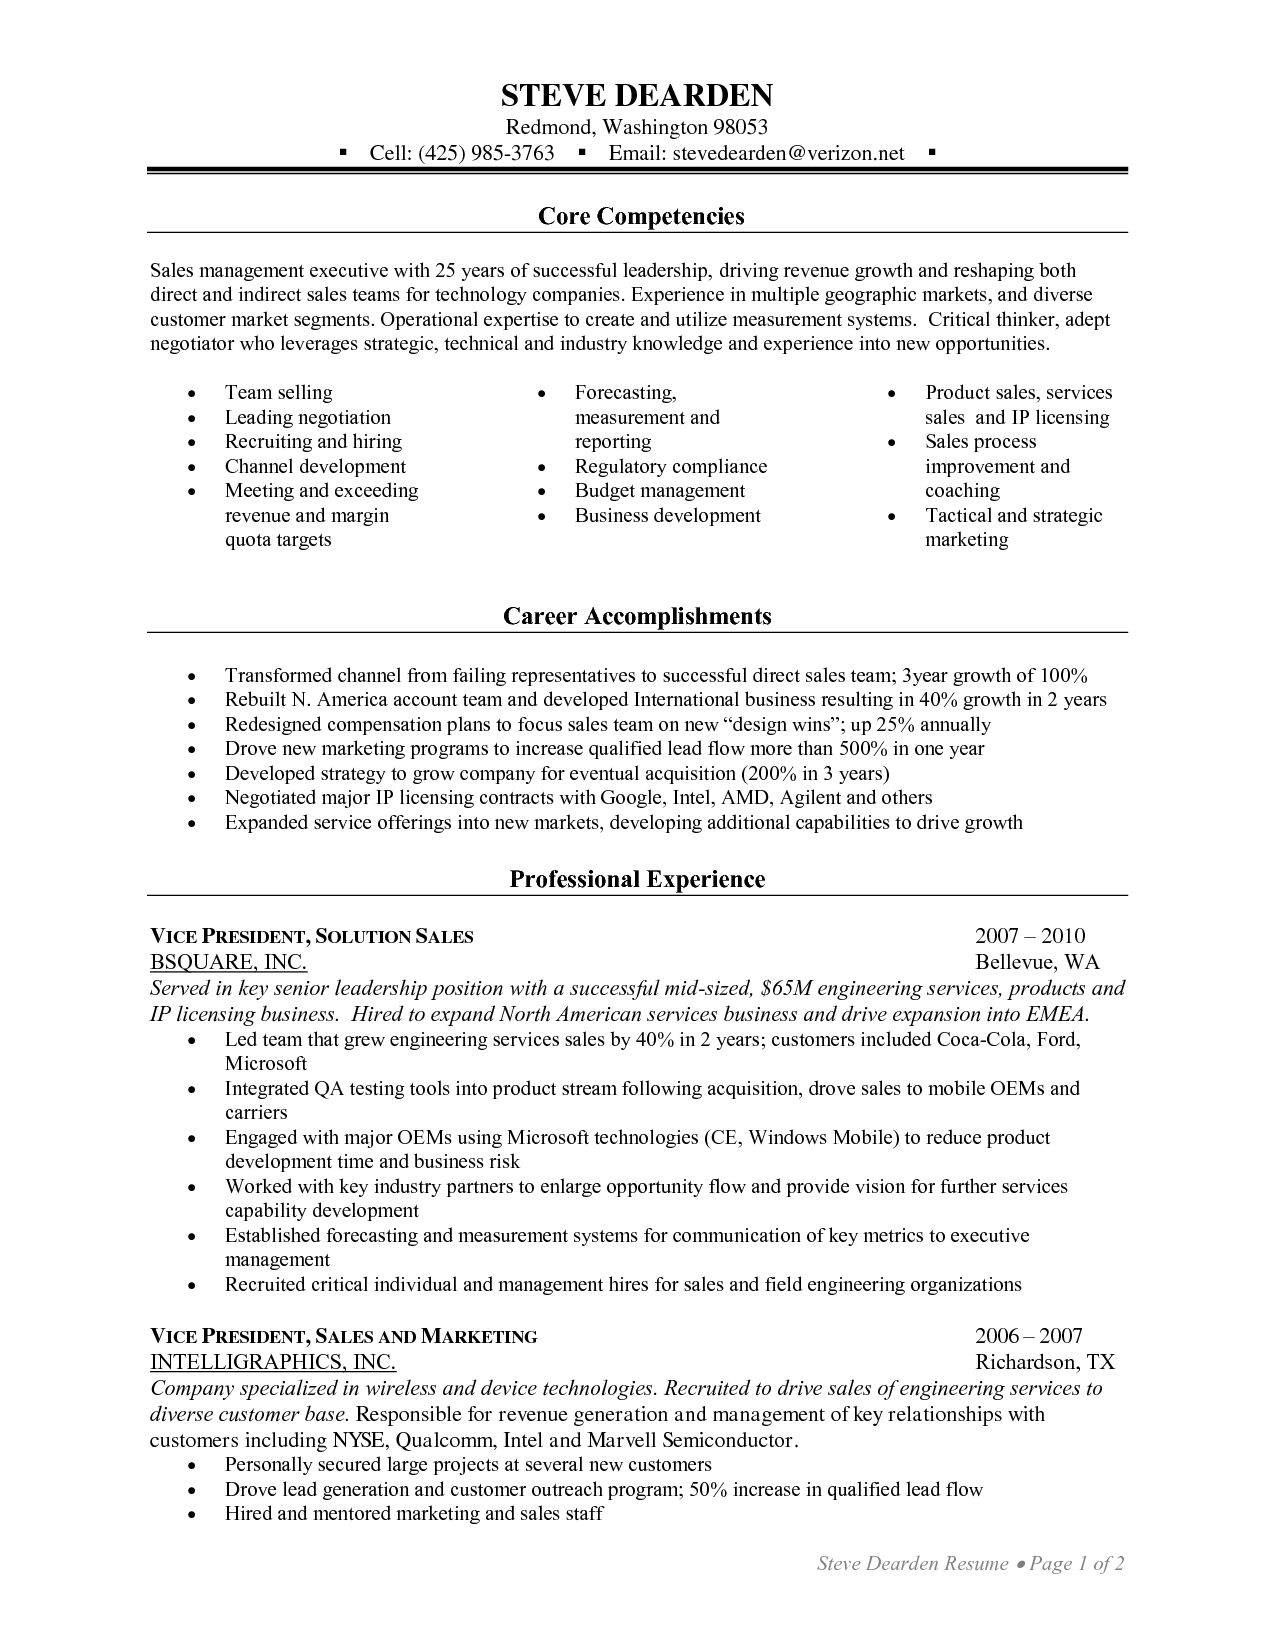 resume examples core competencies